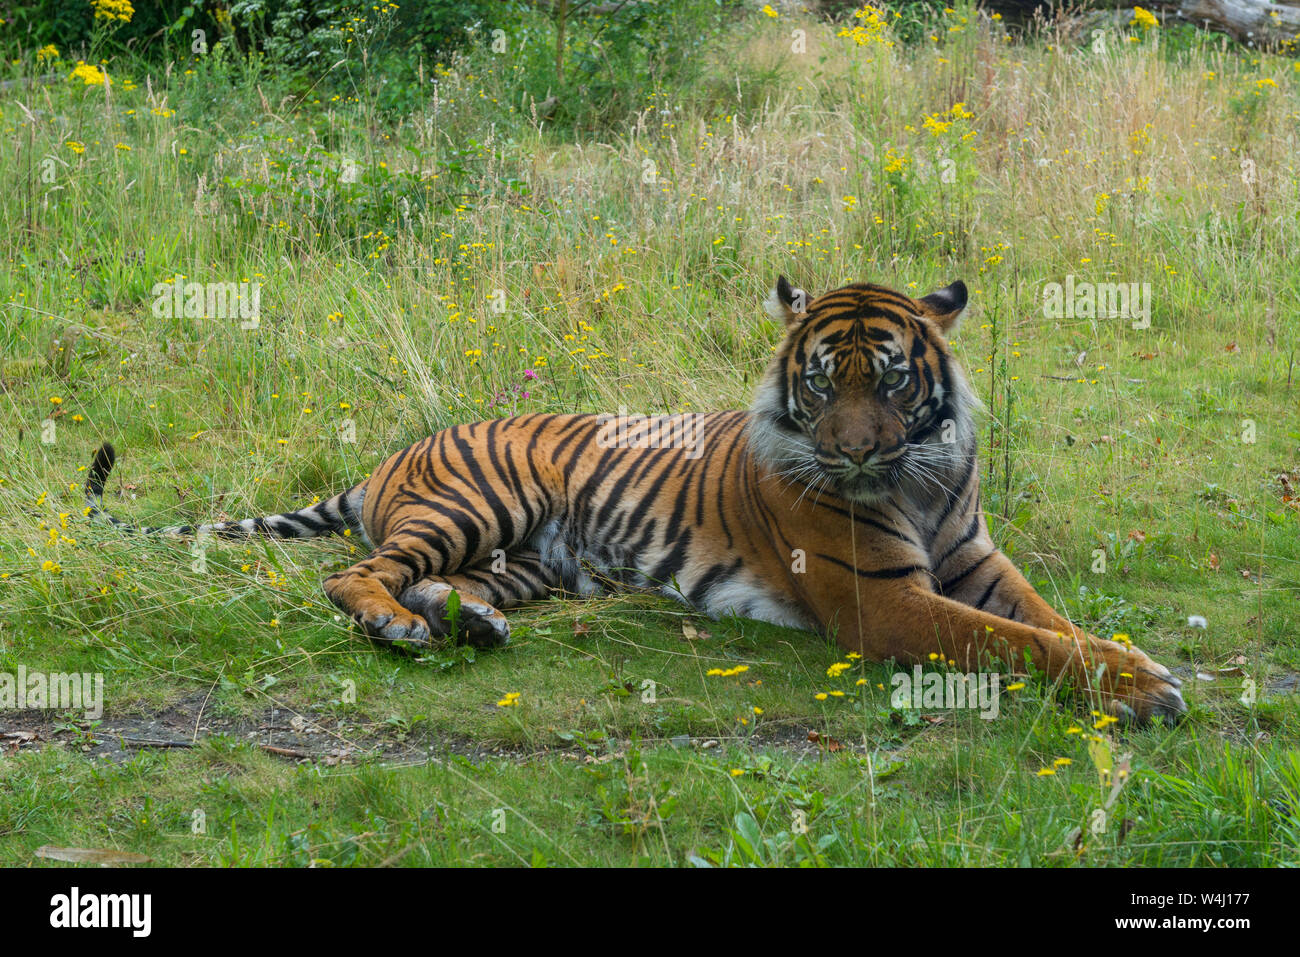 La tigre di Sumatra ( Panthera tigris sondaica ) giacente in erba Foto Stock